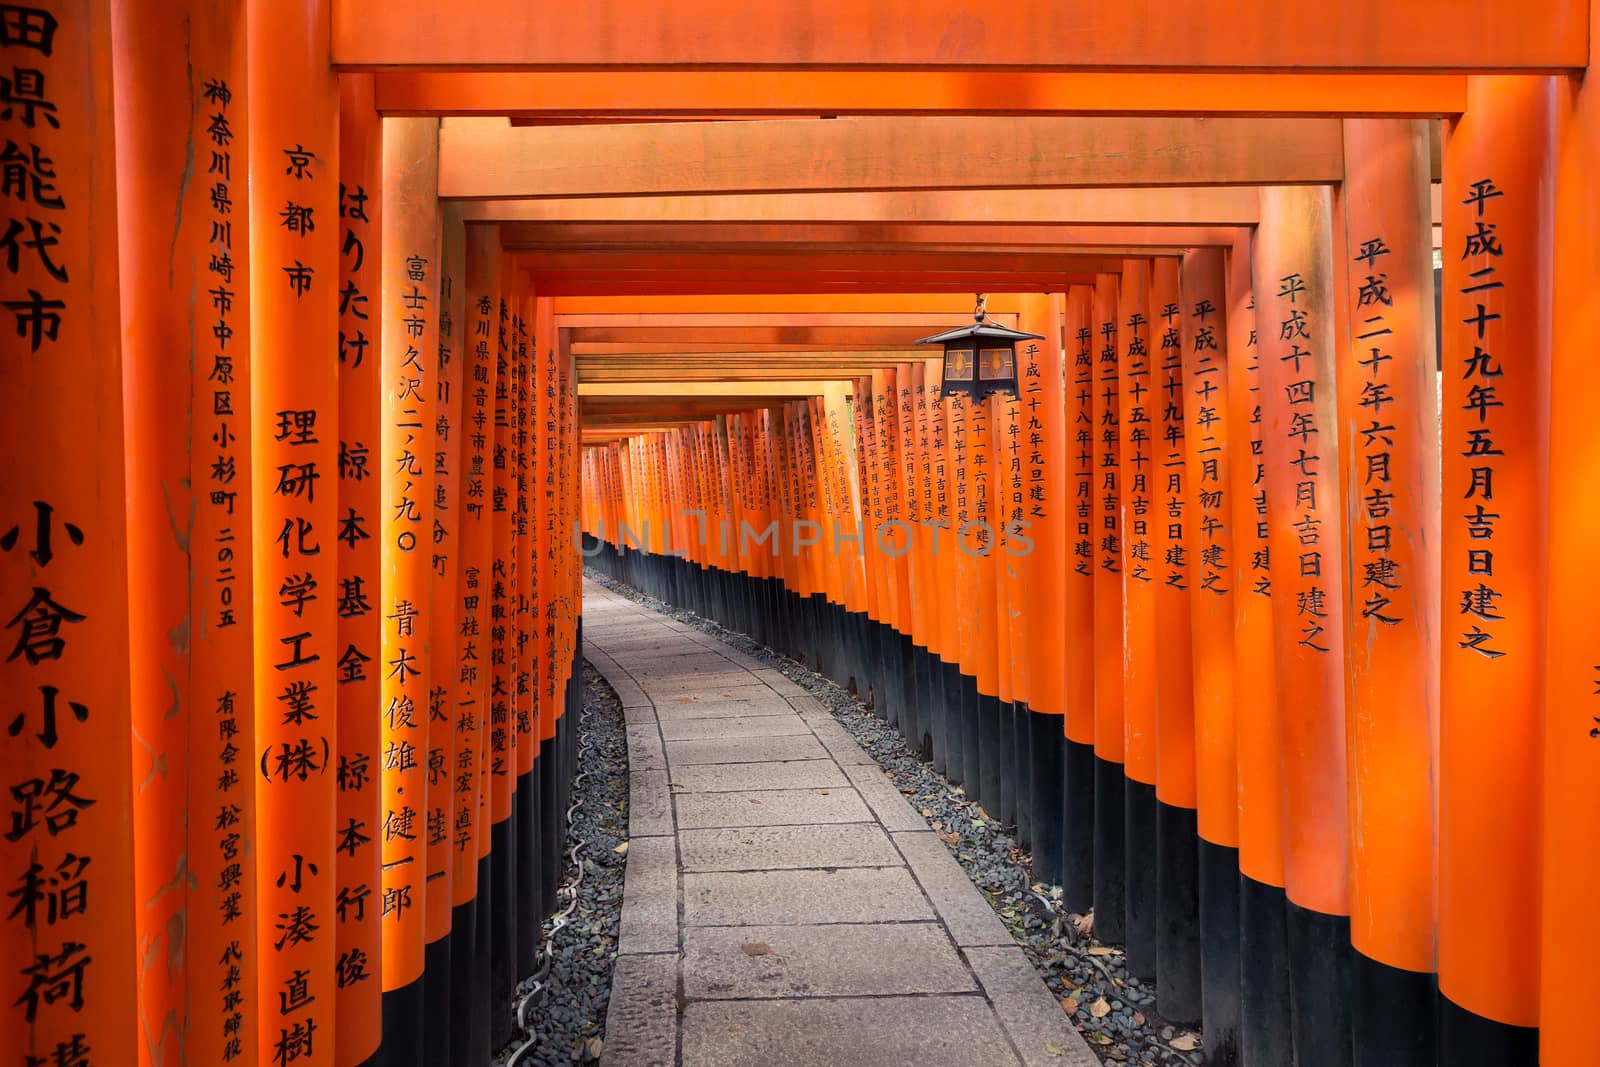 Torii path at Fushimi Inari Taisha Shrine in Kyoto, Japan by zhu_zhu